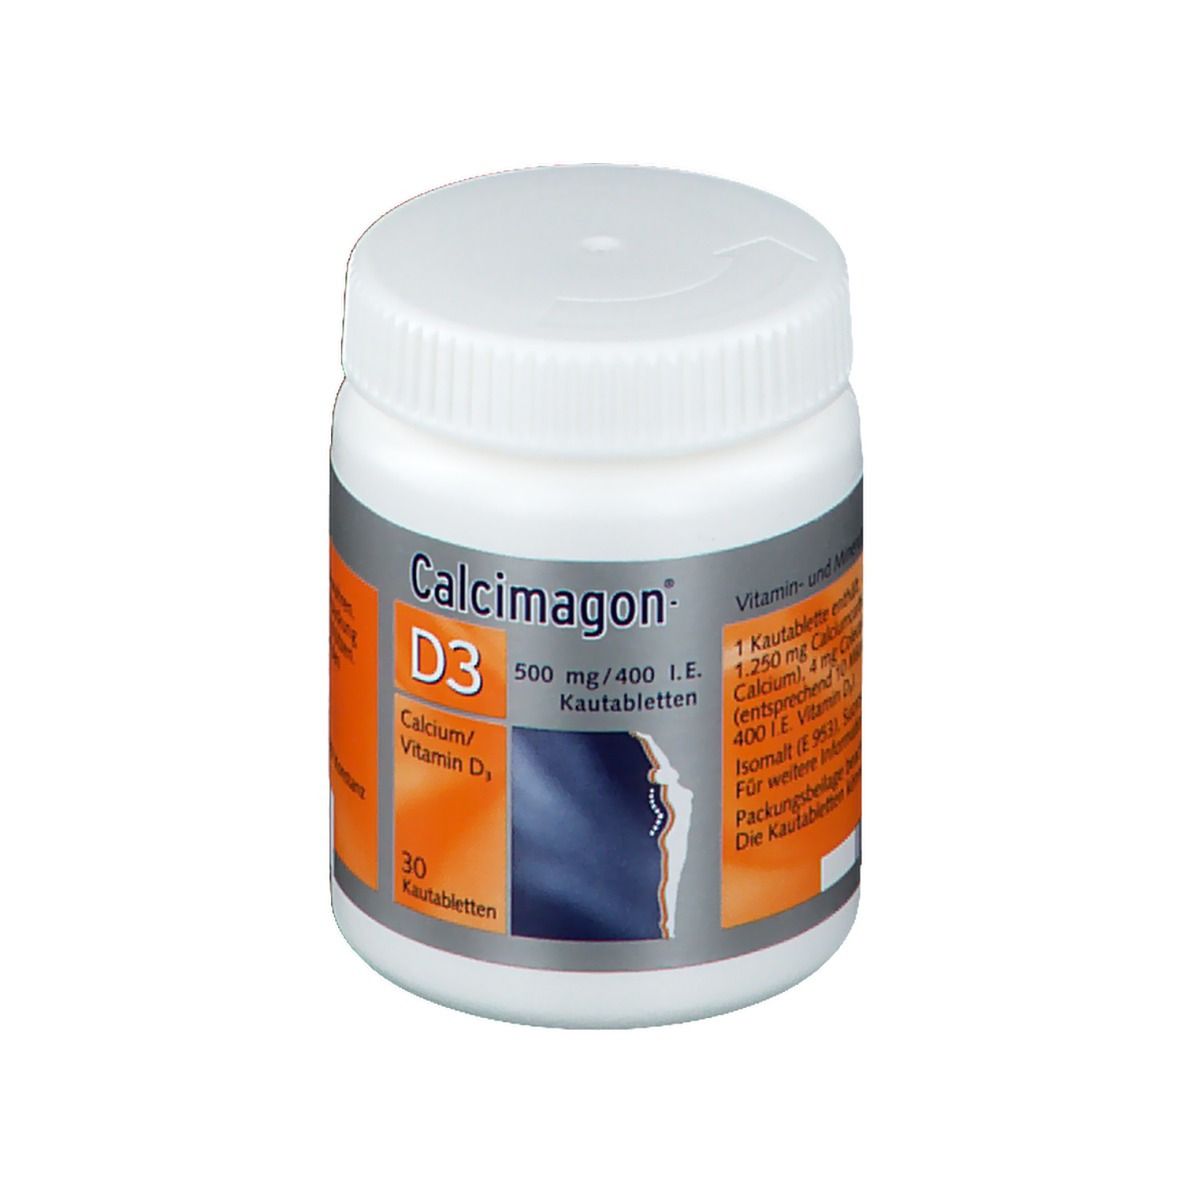 Calcimagon®-D3 500 mg/ 400 I.E. Kautabletten